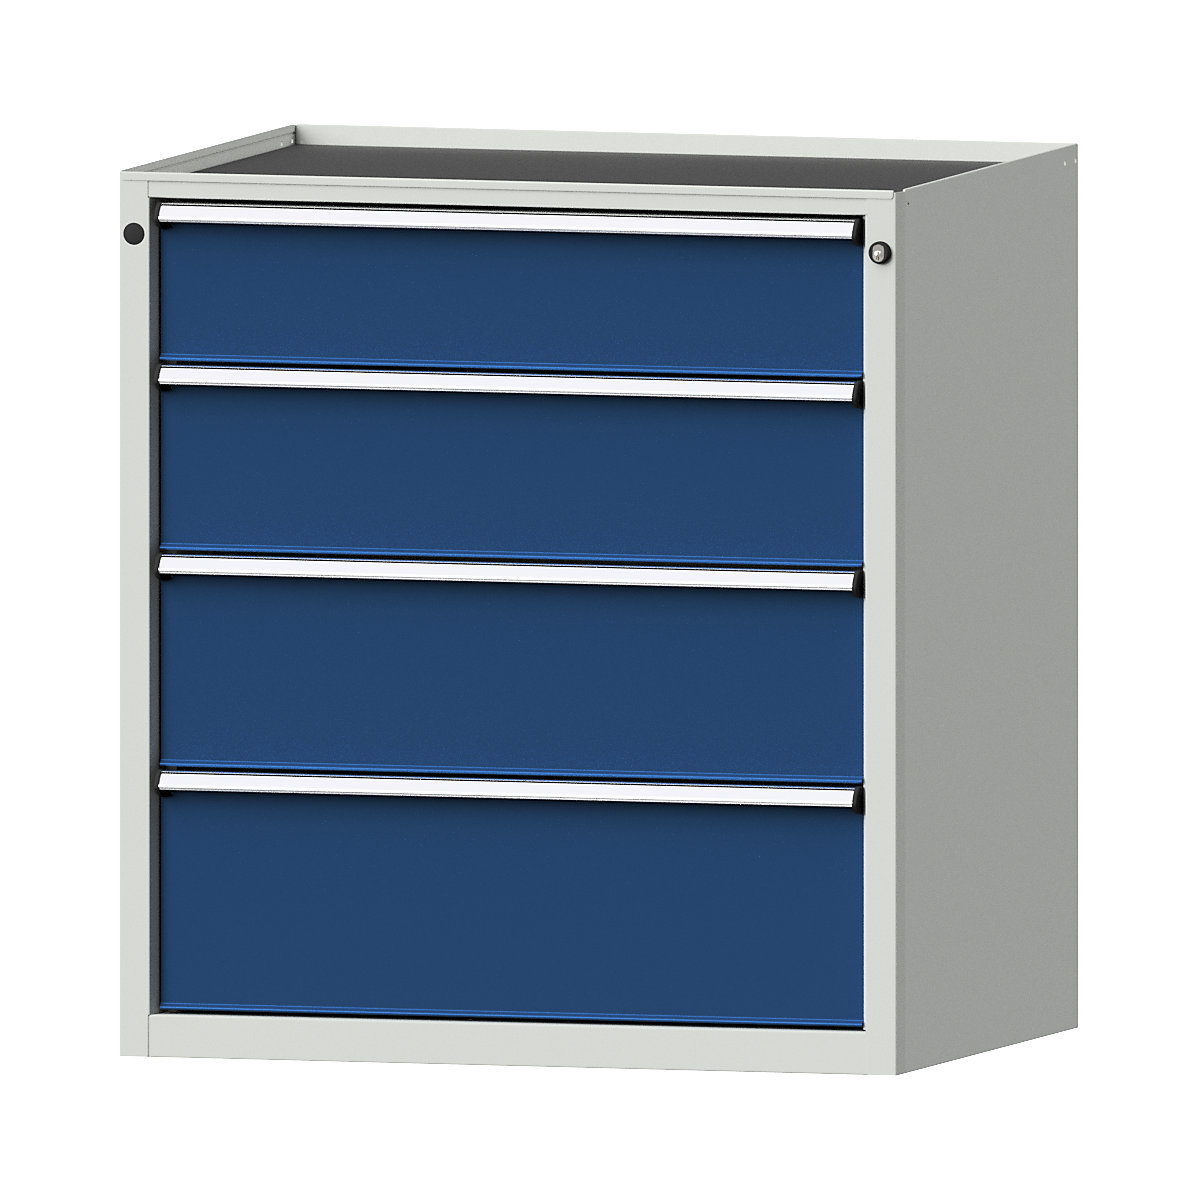 Armoire à tiroirs – ANKE, l x p 910 x 675 mm, 4 tiroirs, hauteur 980 mm, façade bleu gentiane-13